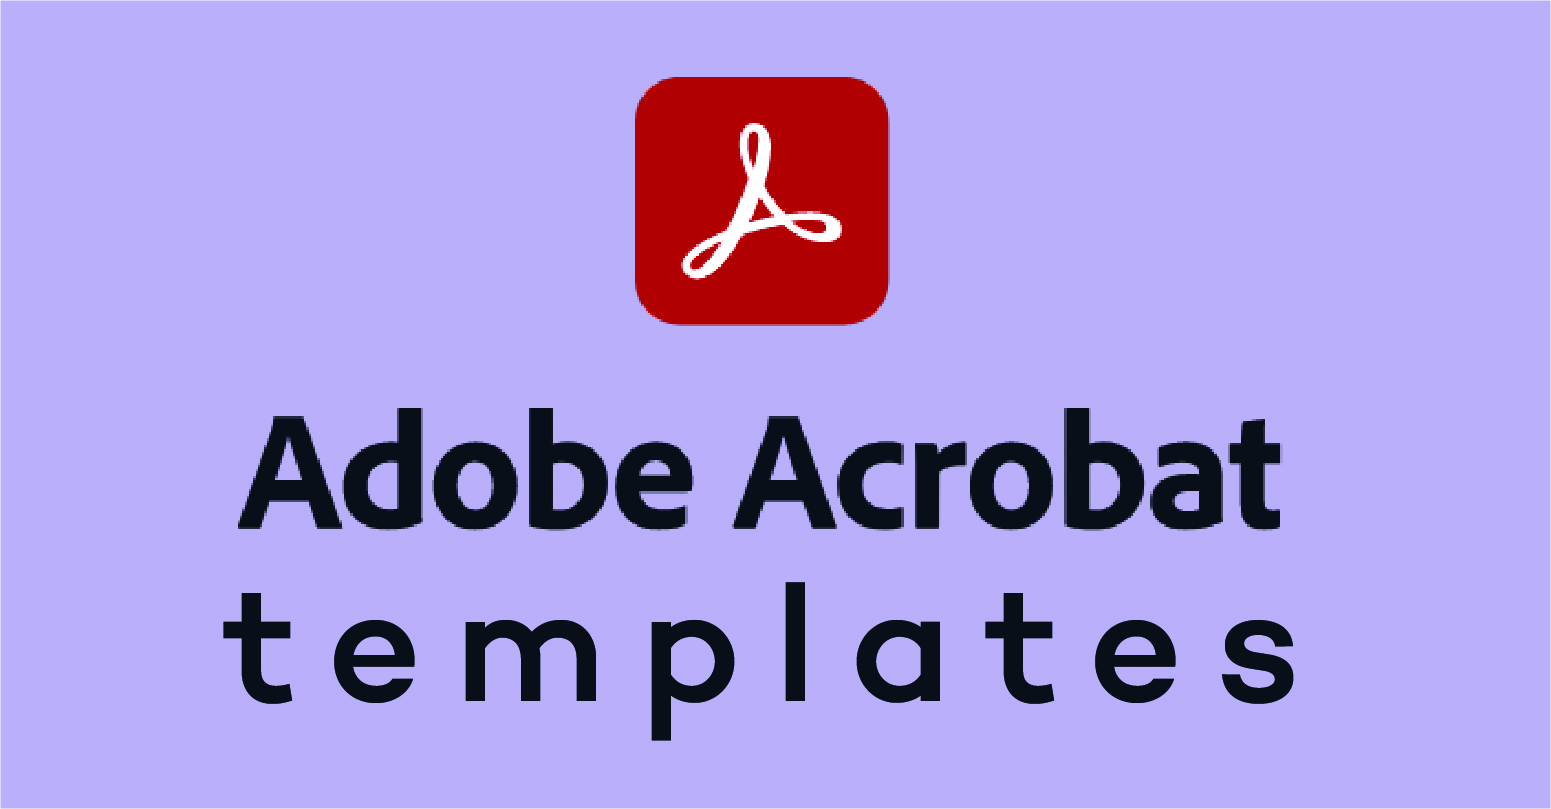 Adobe Acrobat Templates